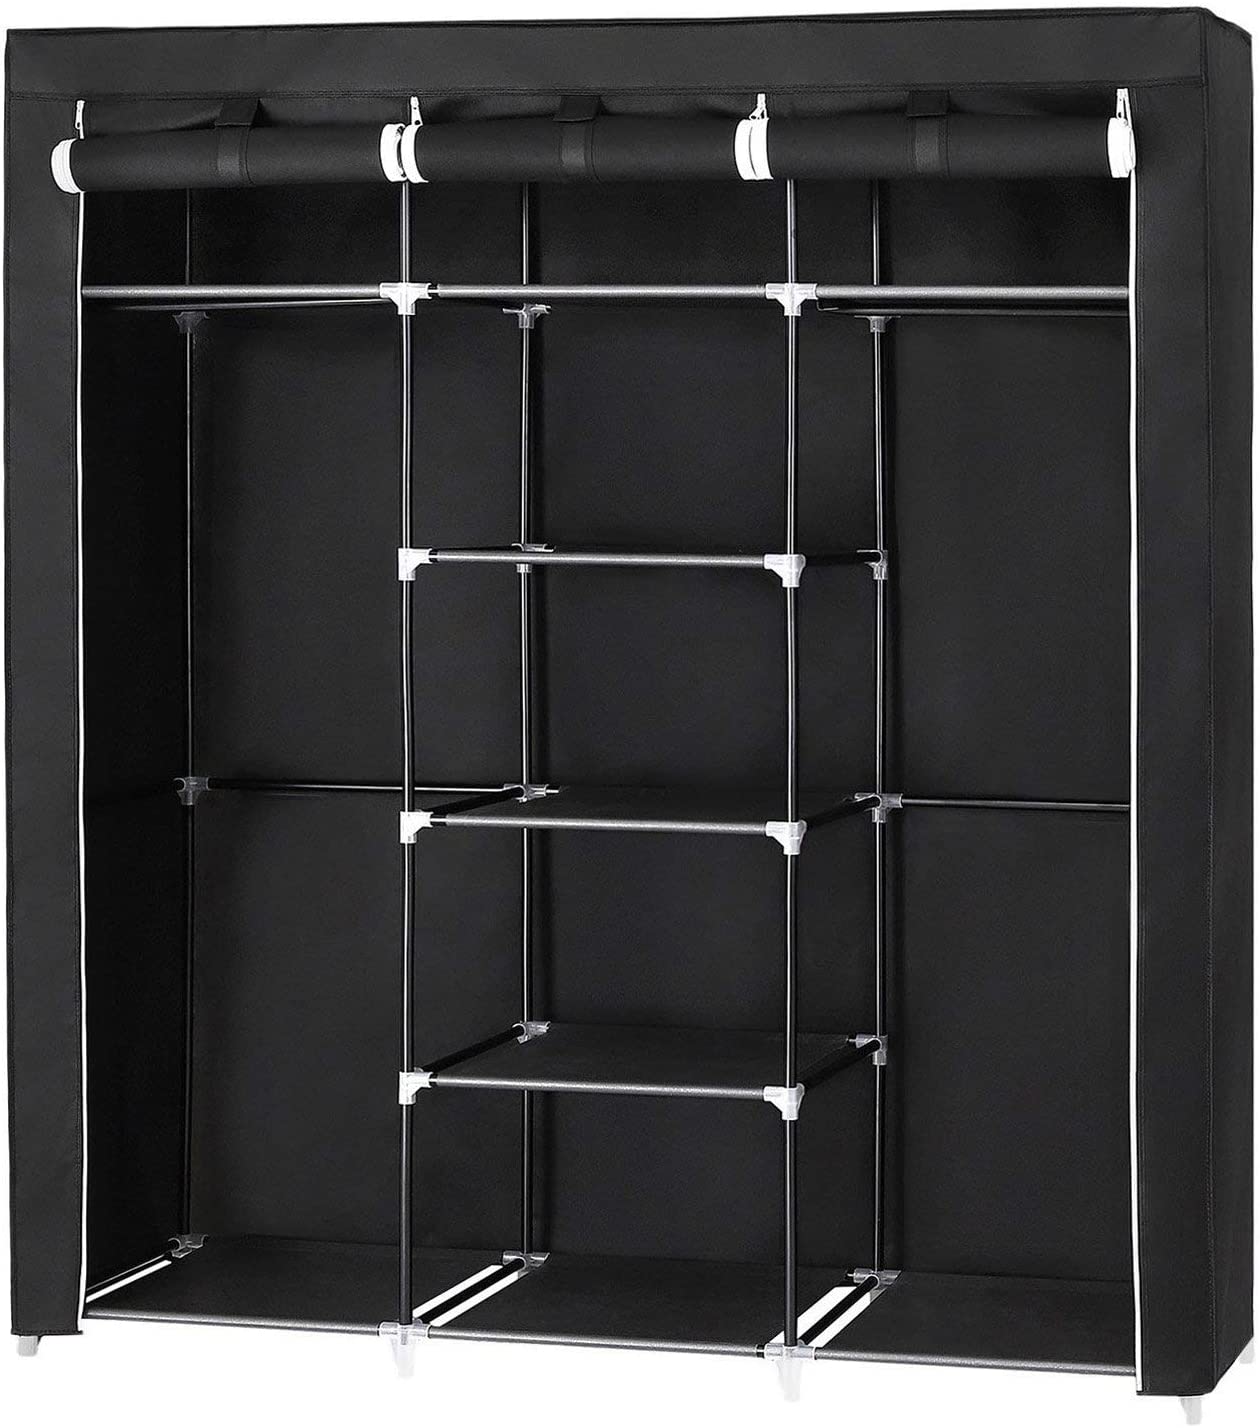 Wardrobe Storage Shelves Organizer with 2 Hanging Rods